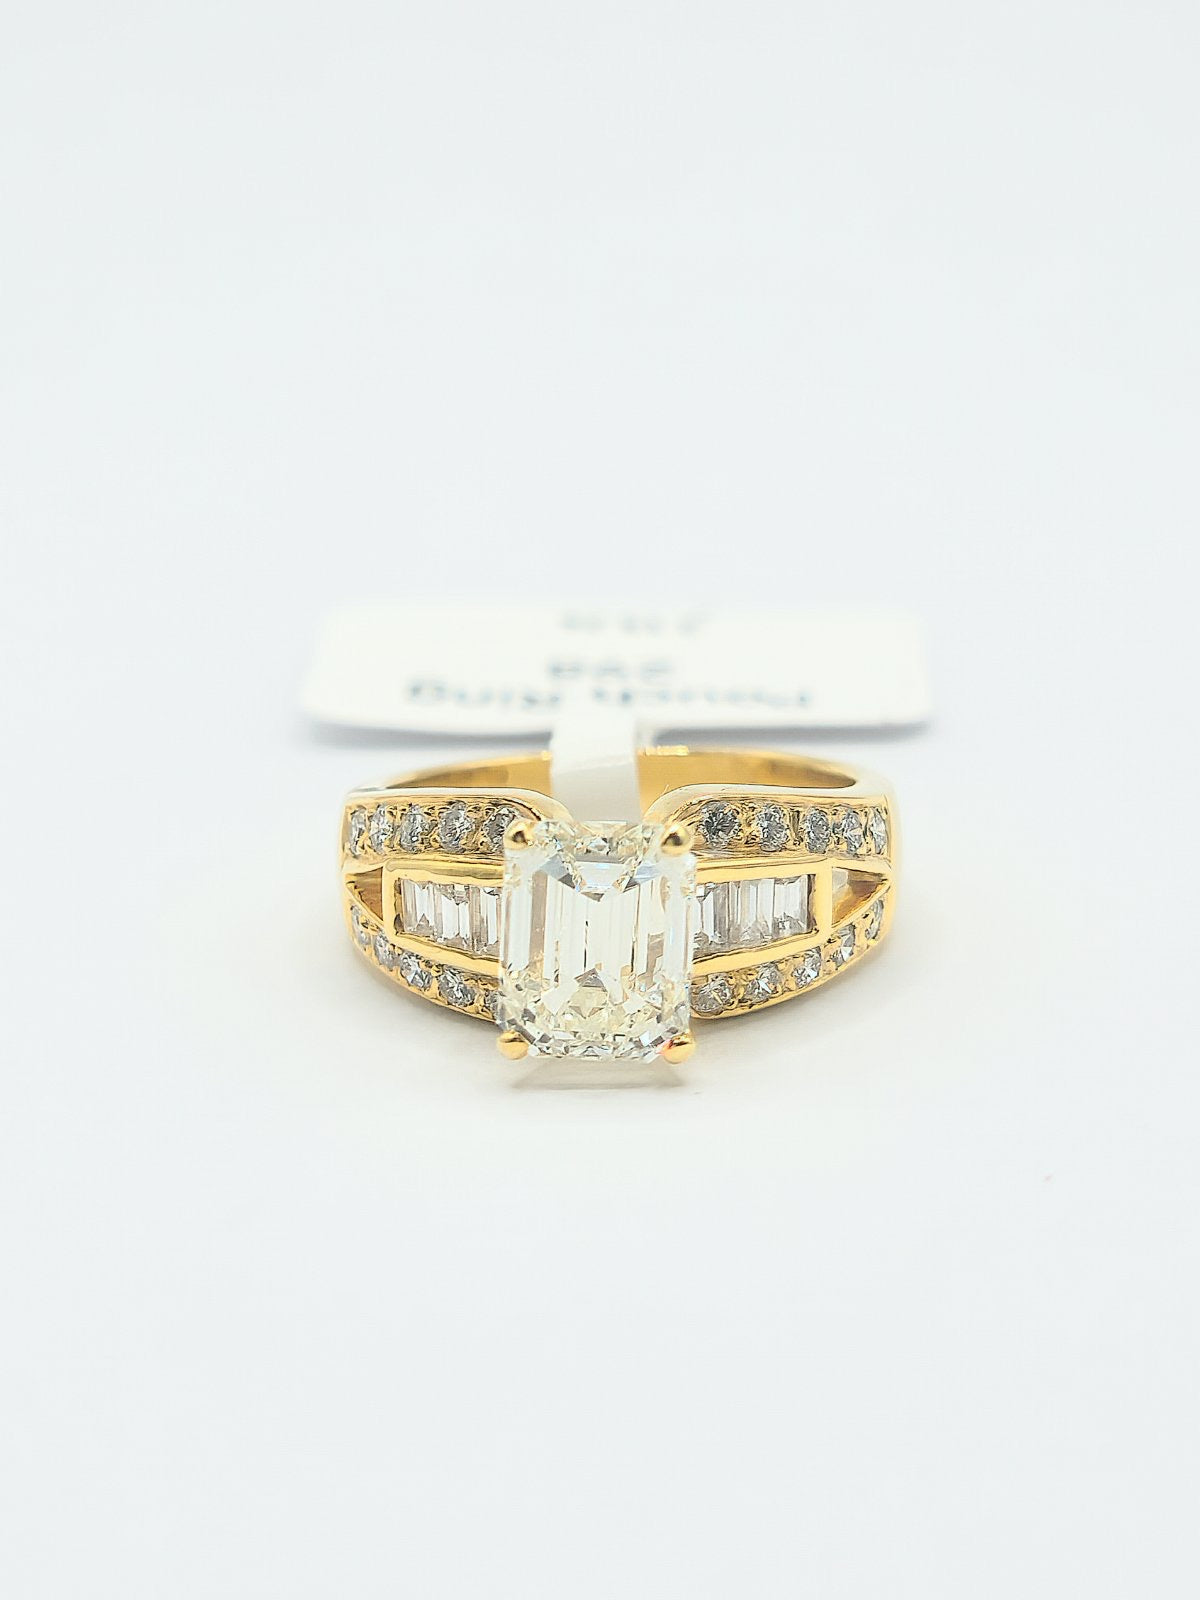 Diamond engagement ring philippines